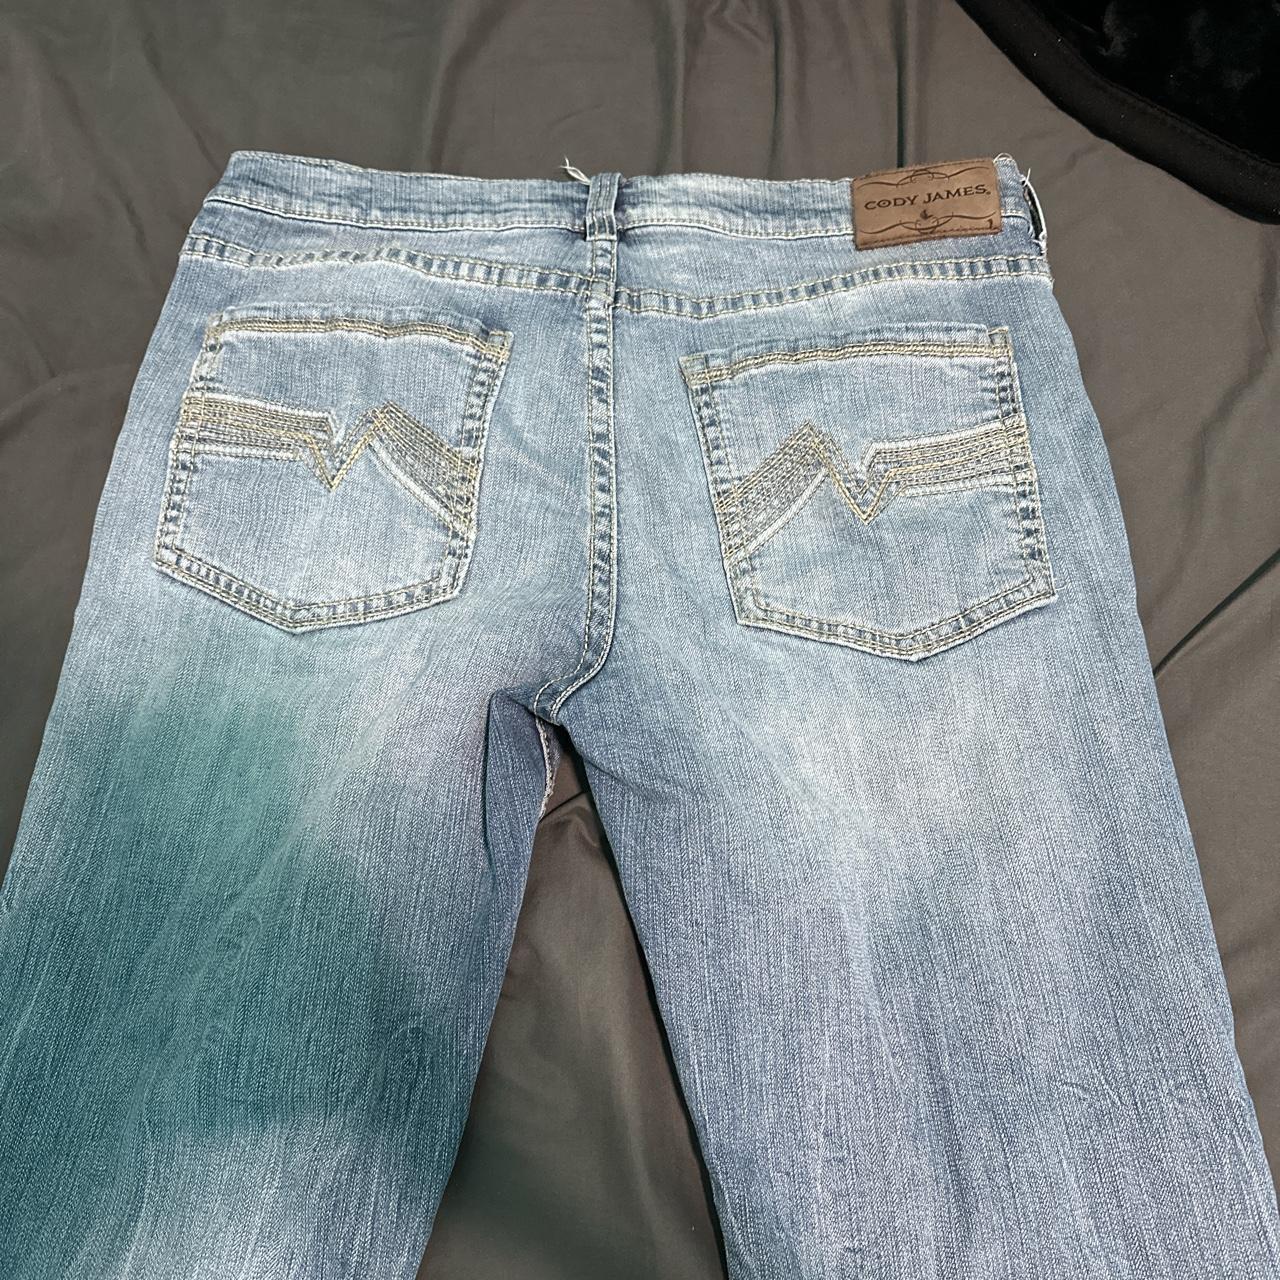 Cody James Men's Jeans (3)